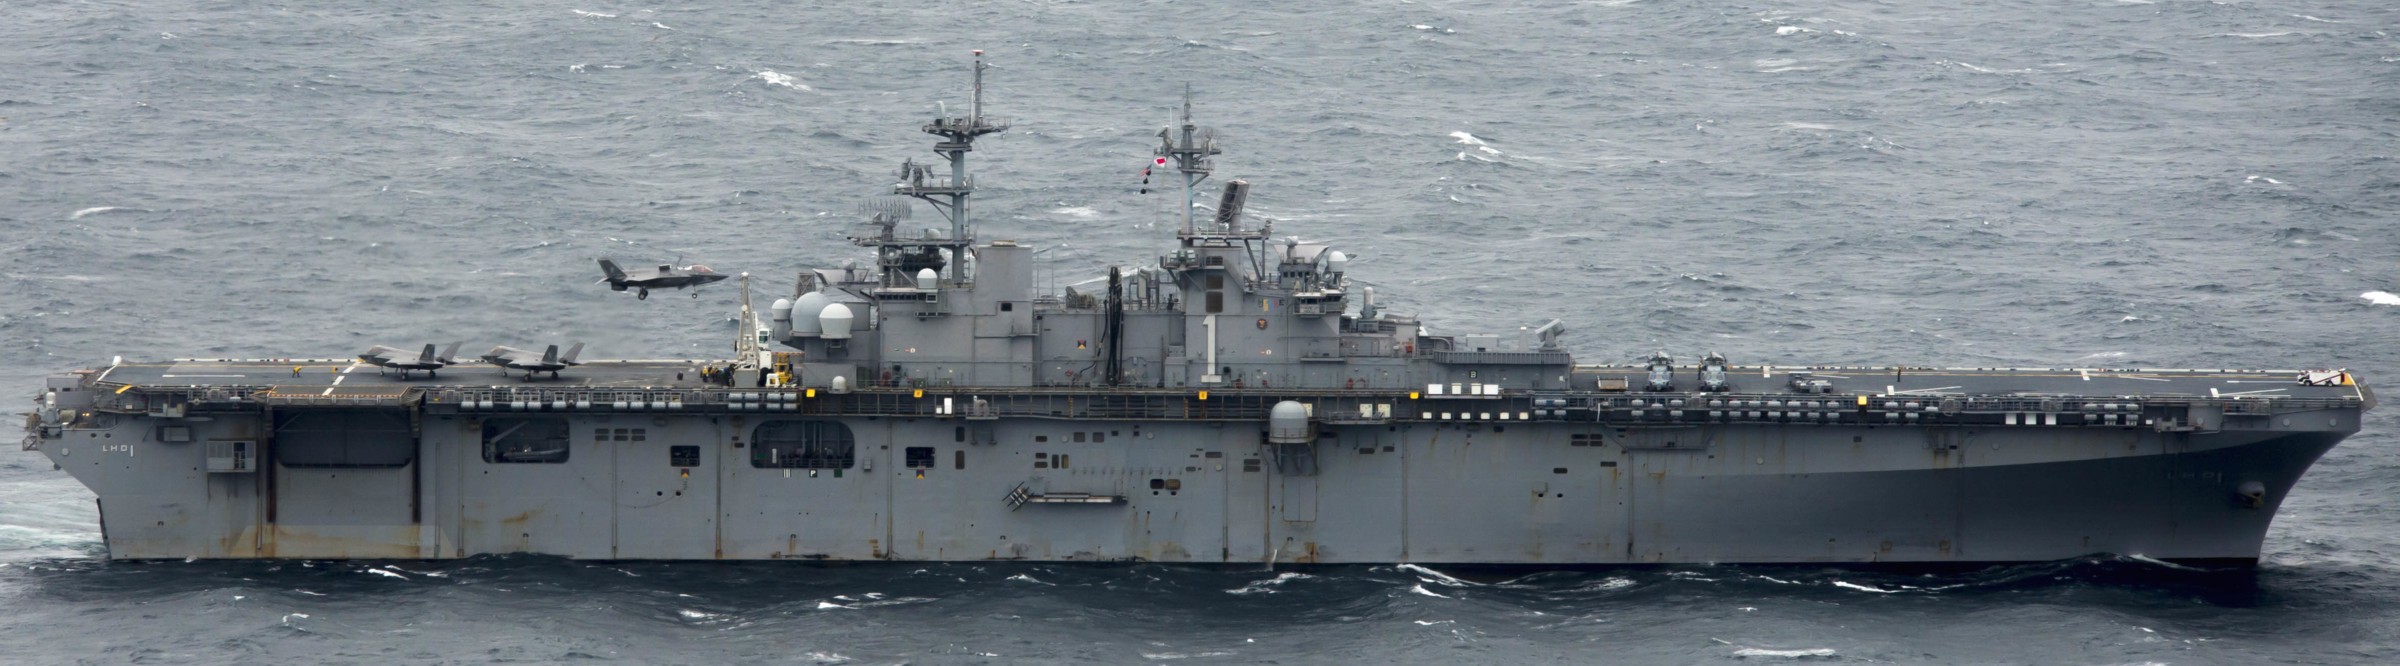 lhd-1 uss wasp amphibious assault landing ship dock helicopter us navy 189